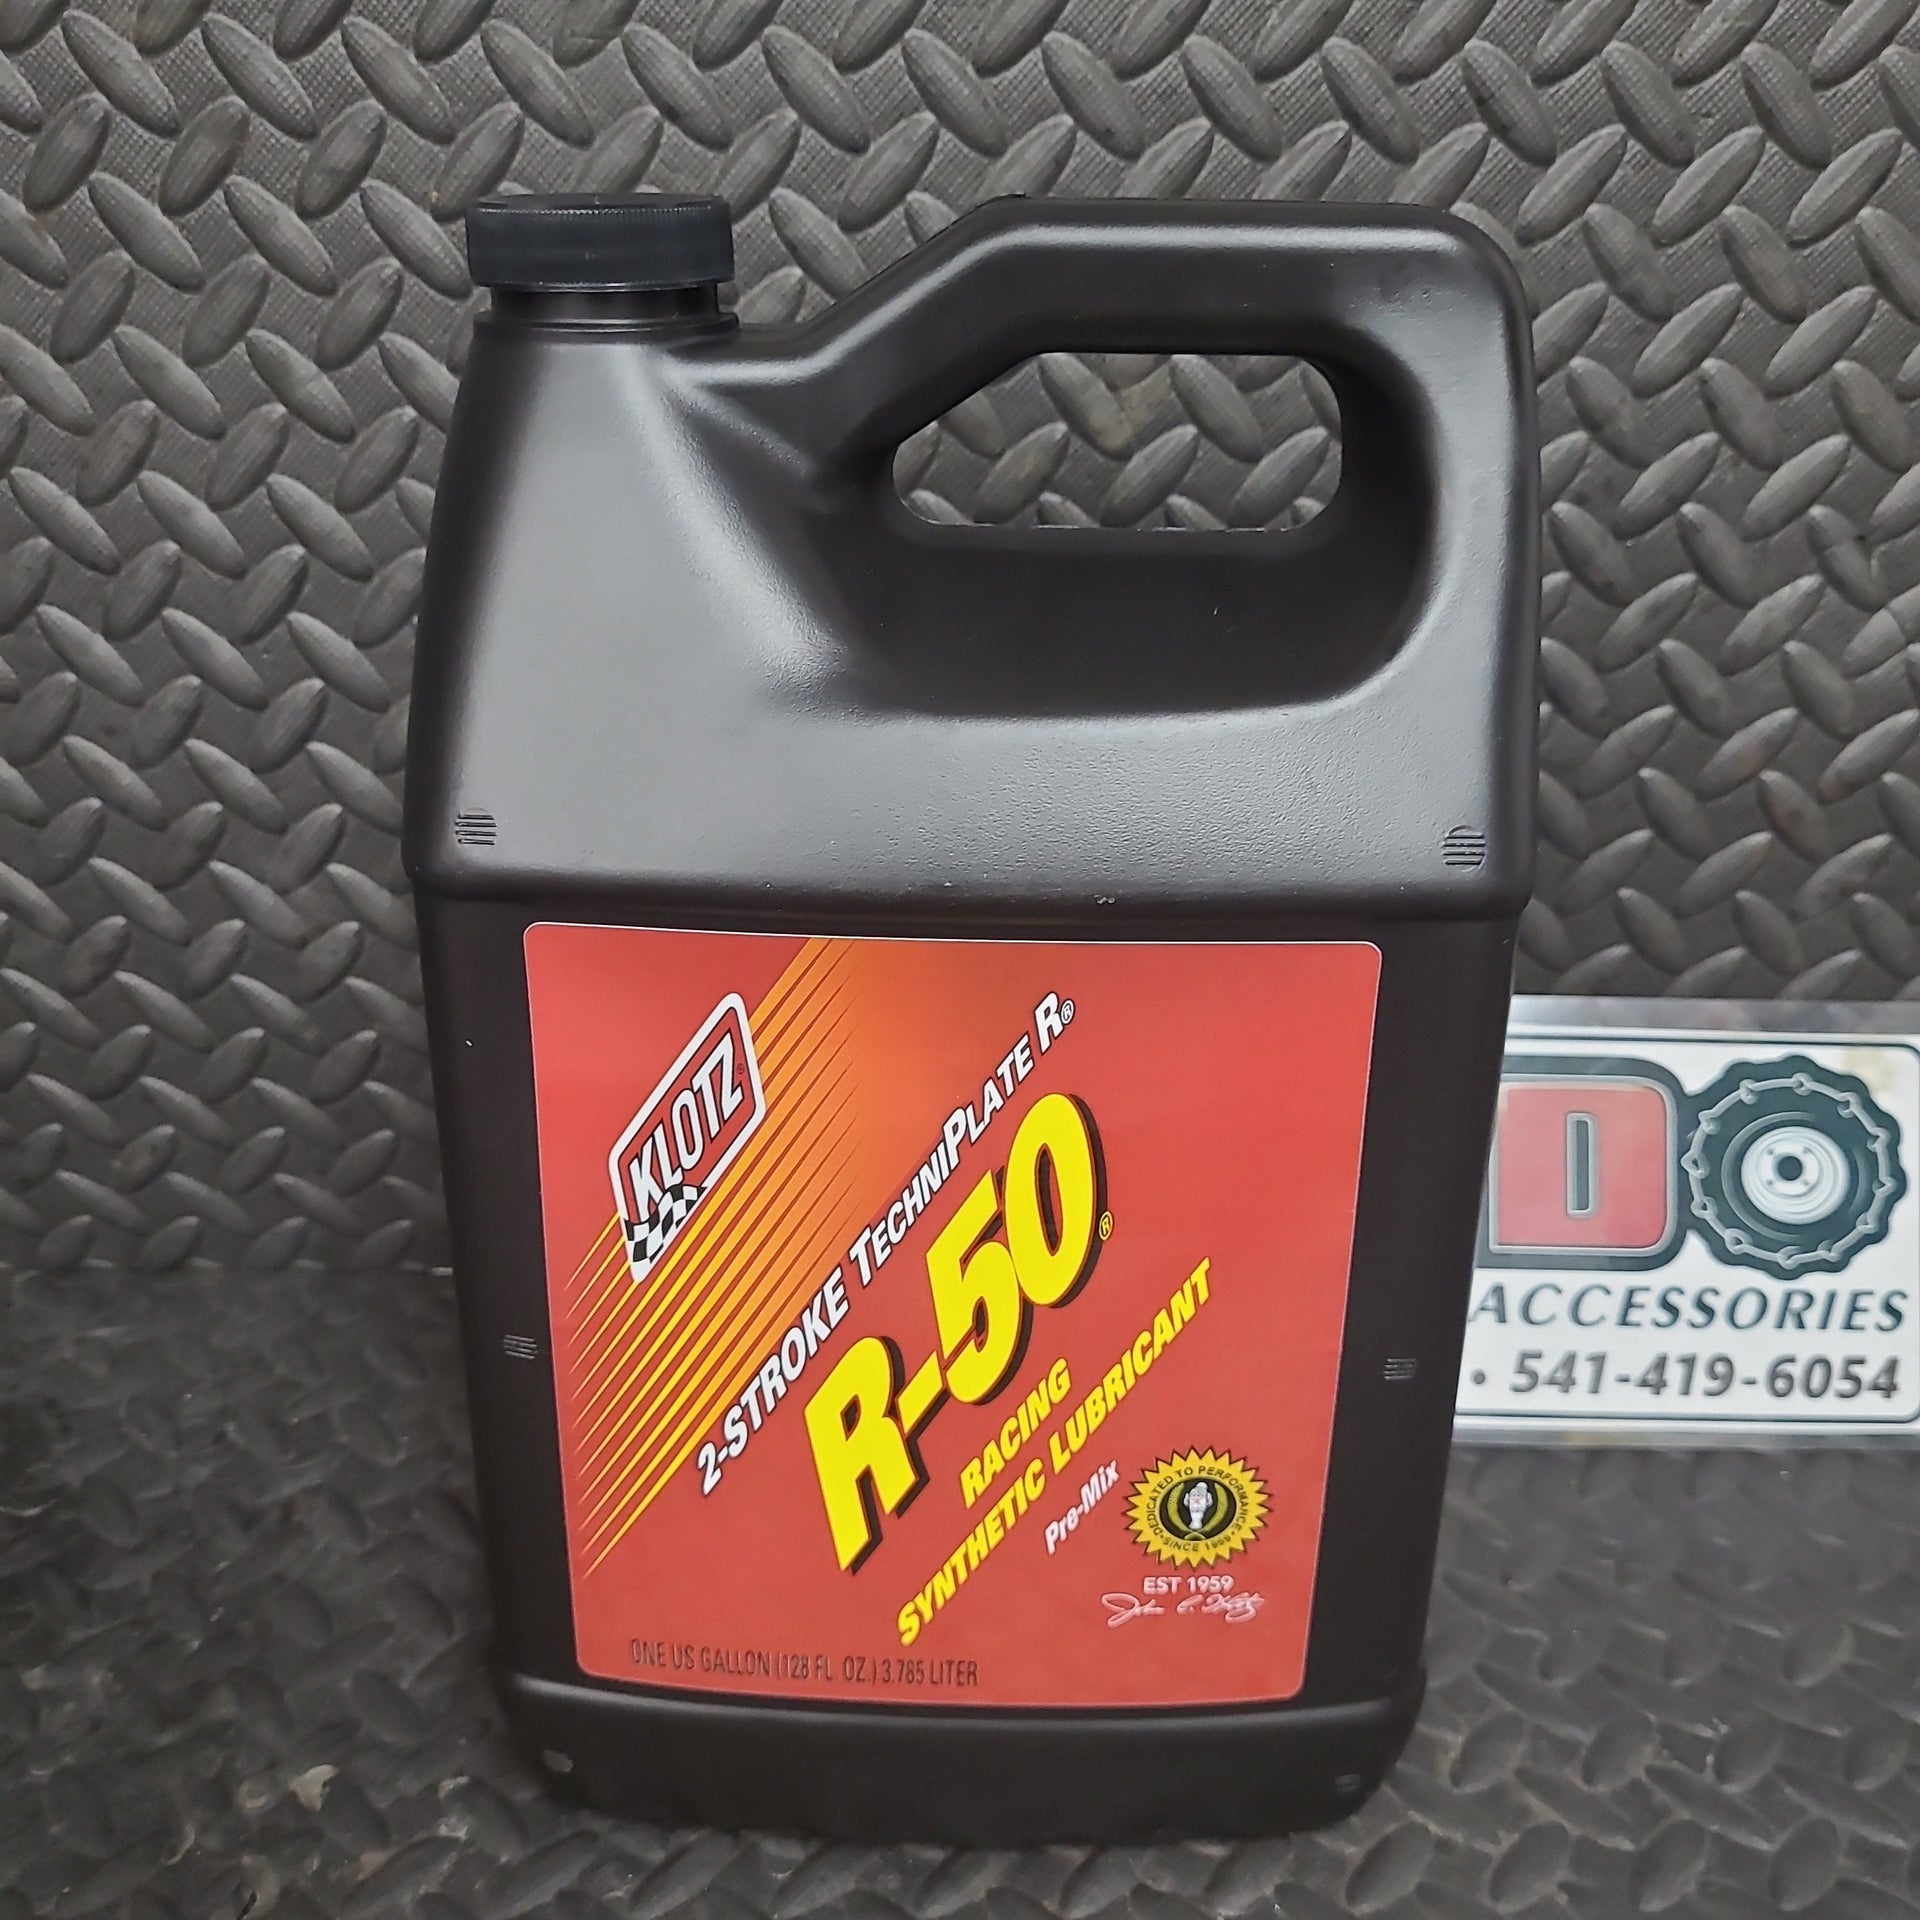 Klotz Oil New R-50 Racing Techniplate� Synthetic 2-Stroke Premix